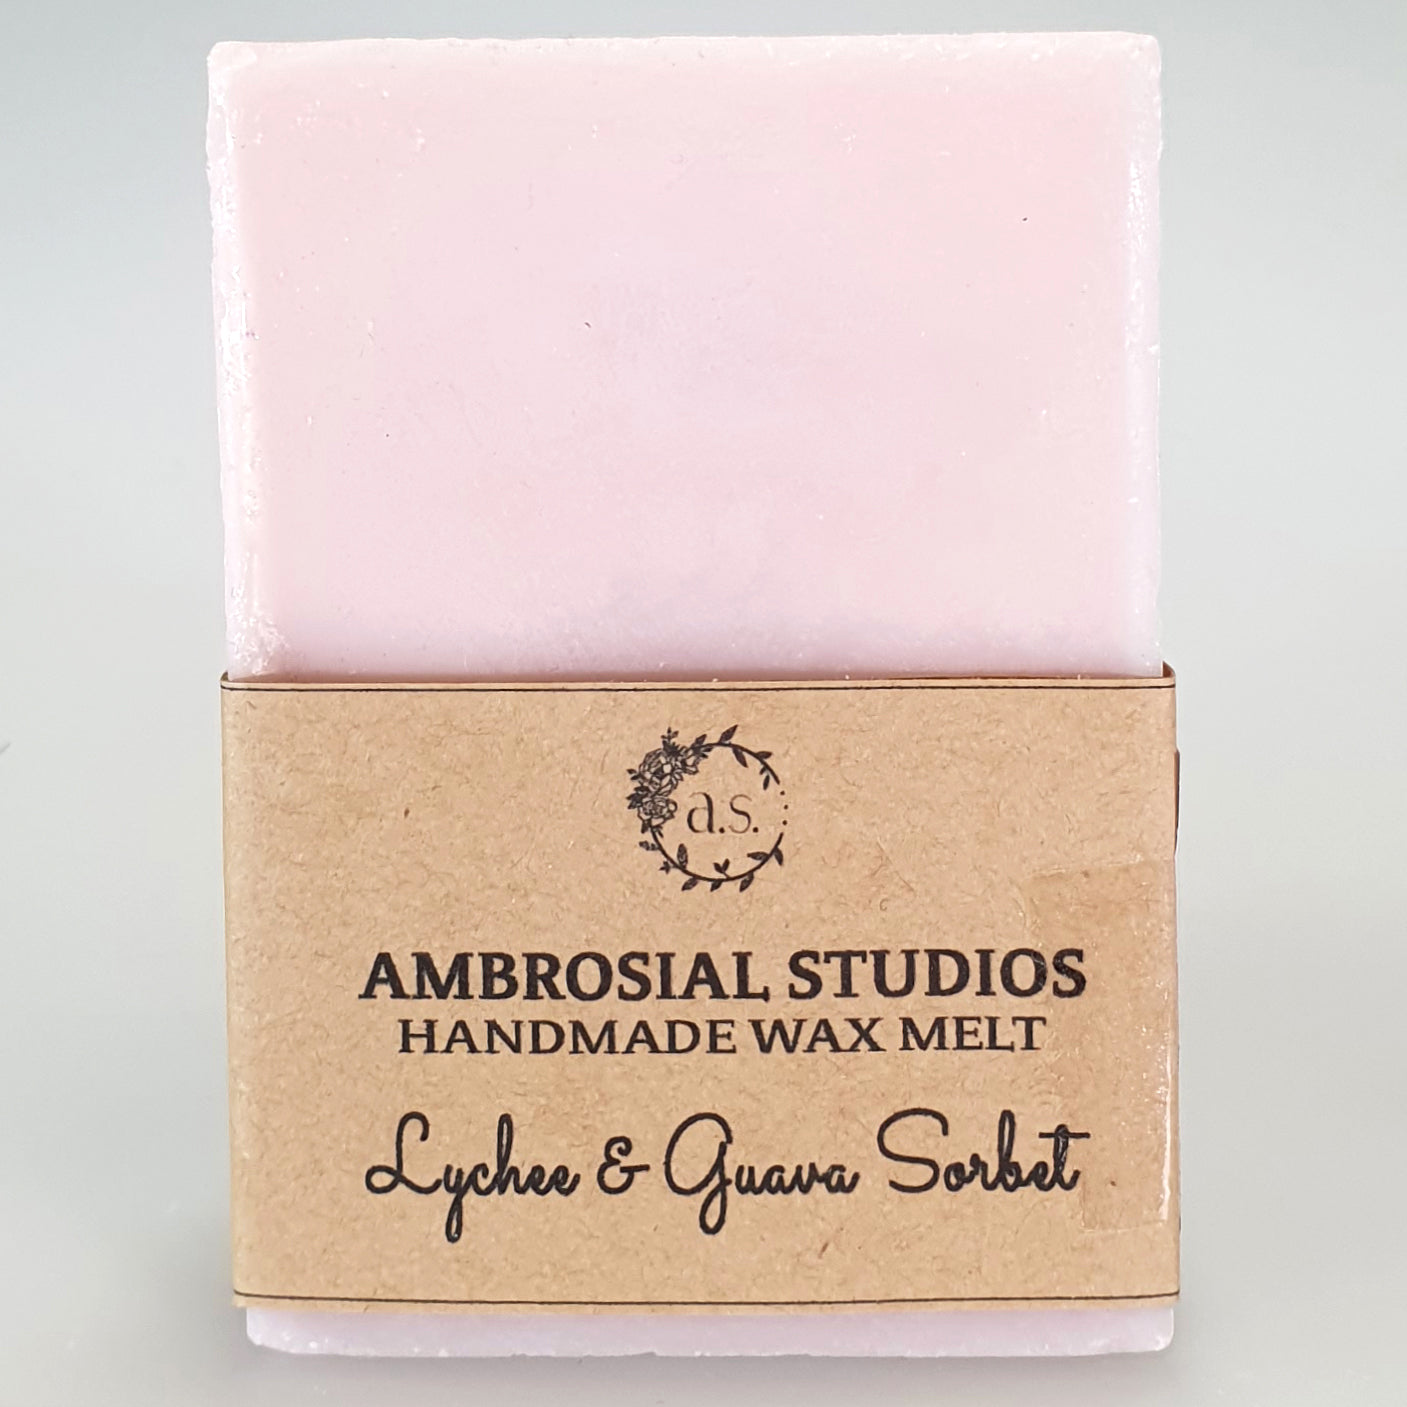 Ambrosial Studios - Handmade Wax Melt - Lychee & Guava Sorbet